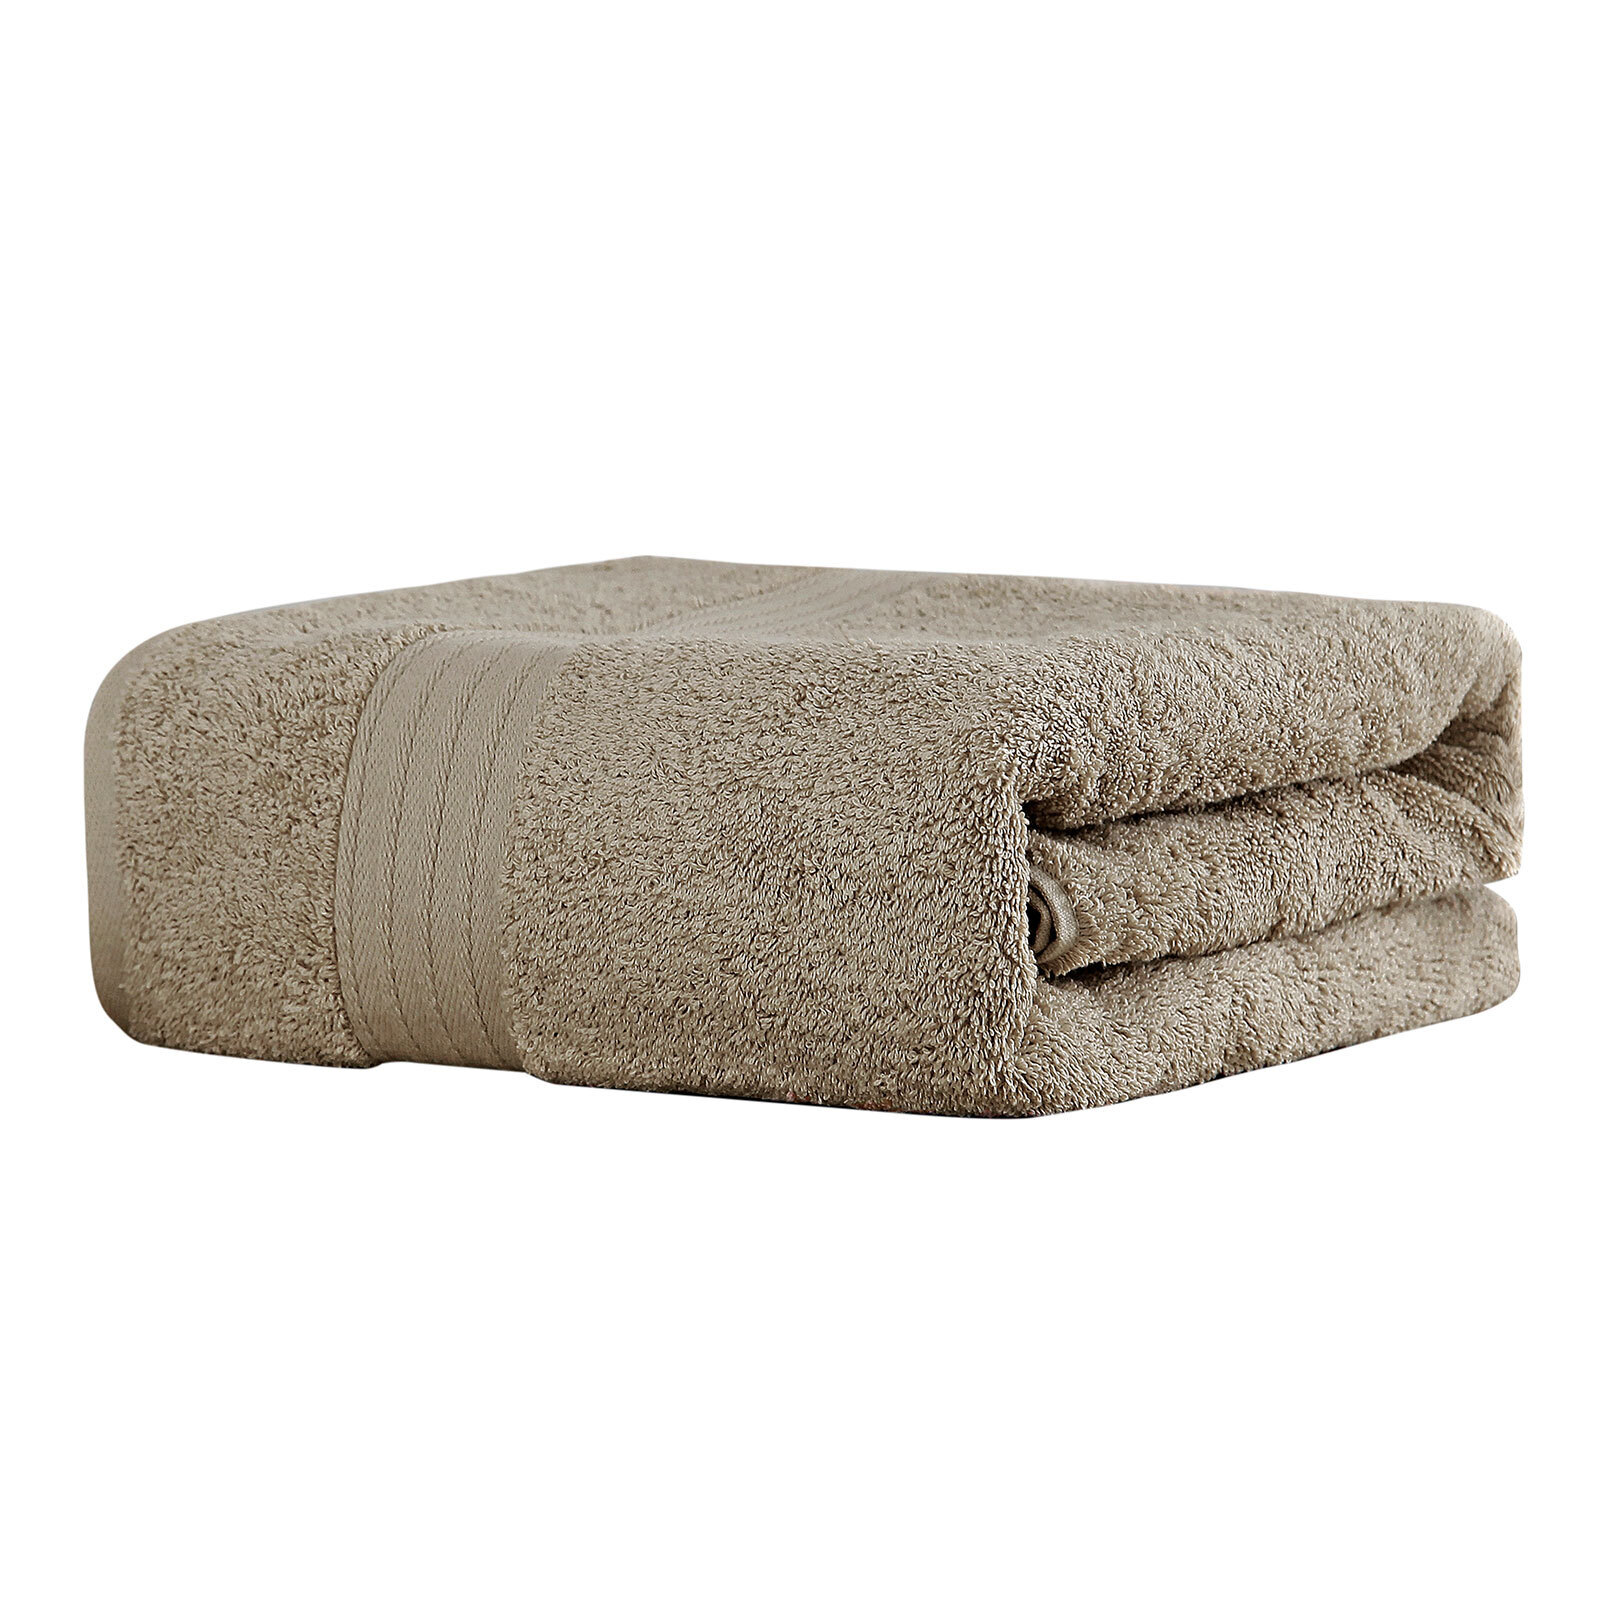 Extra Large Bath Sheet Towel 89 x 178cm – Sandstone